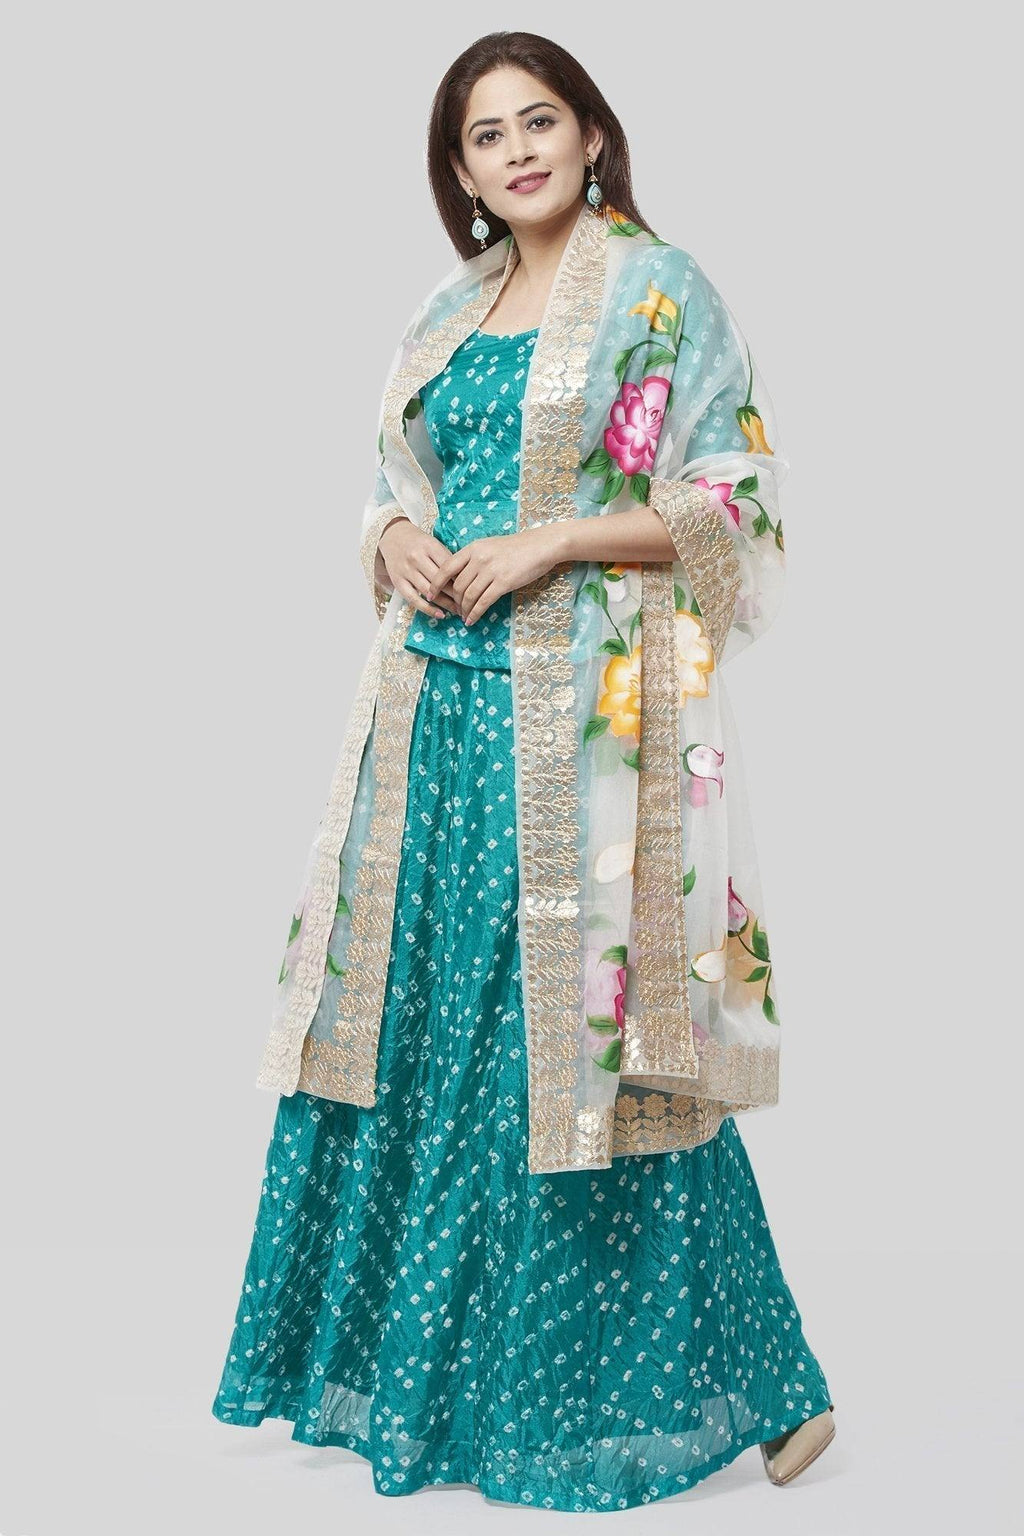 Blue Bandhej Ruffle Silk Lehenga Choli with Pink Gotta Embroidered Organza Dupatta - Ria Fashions